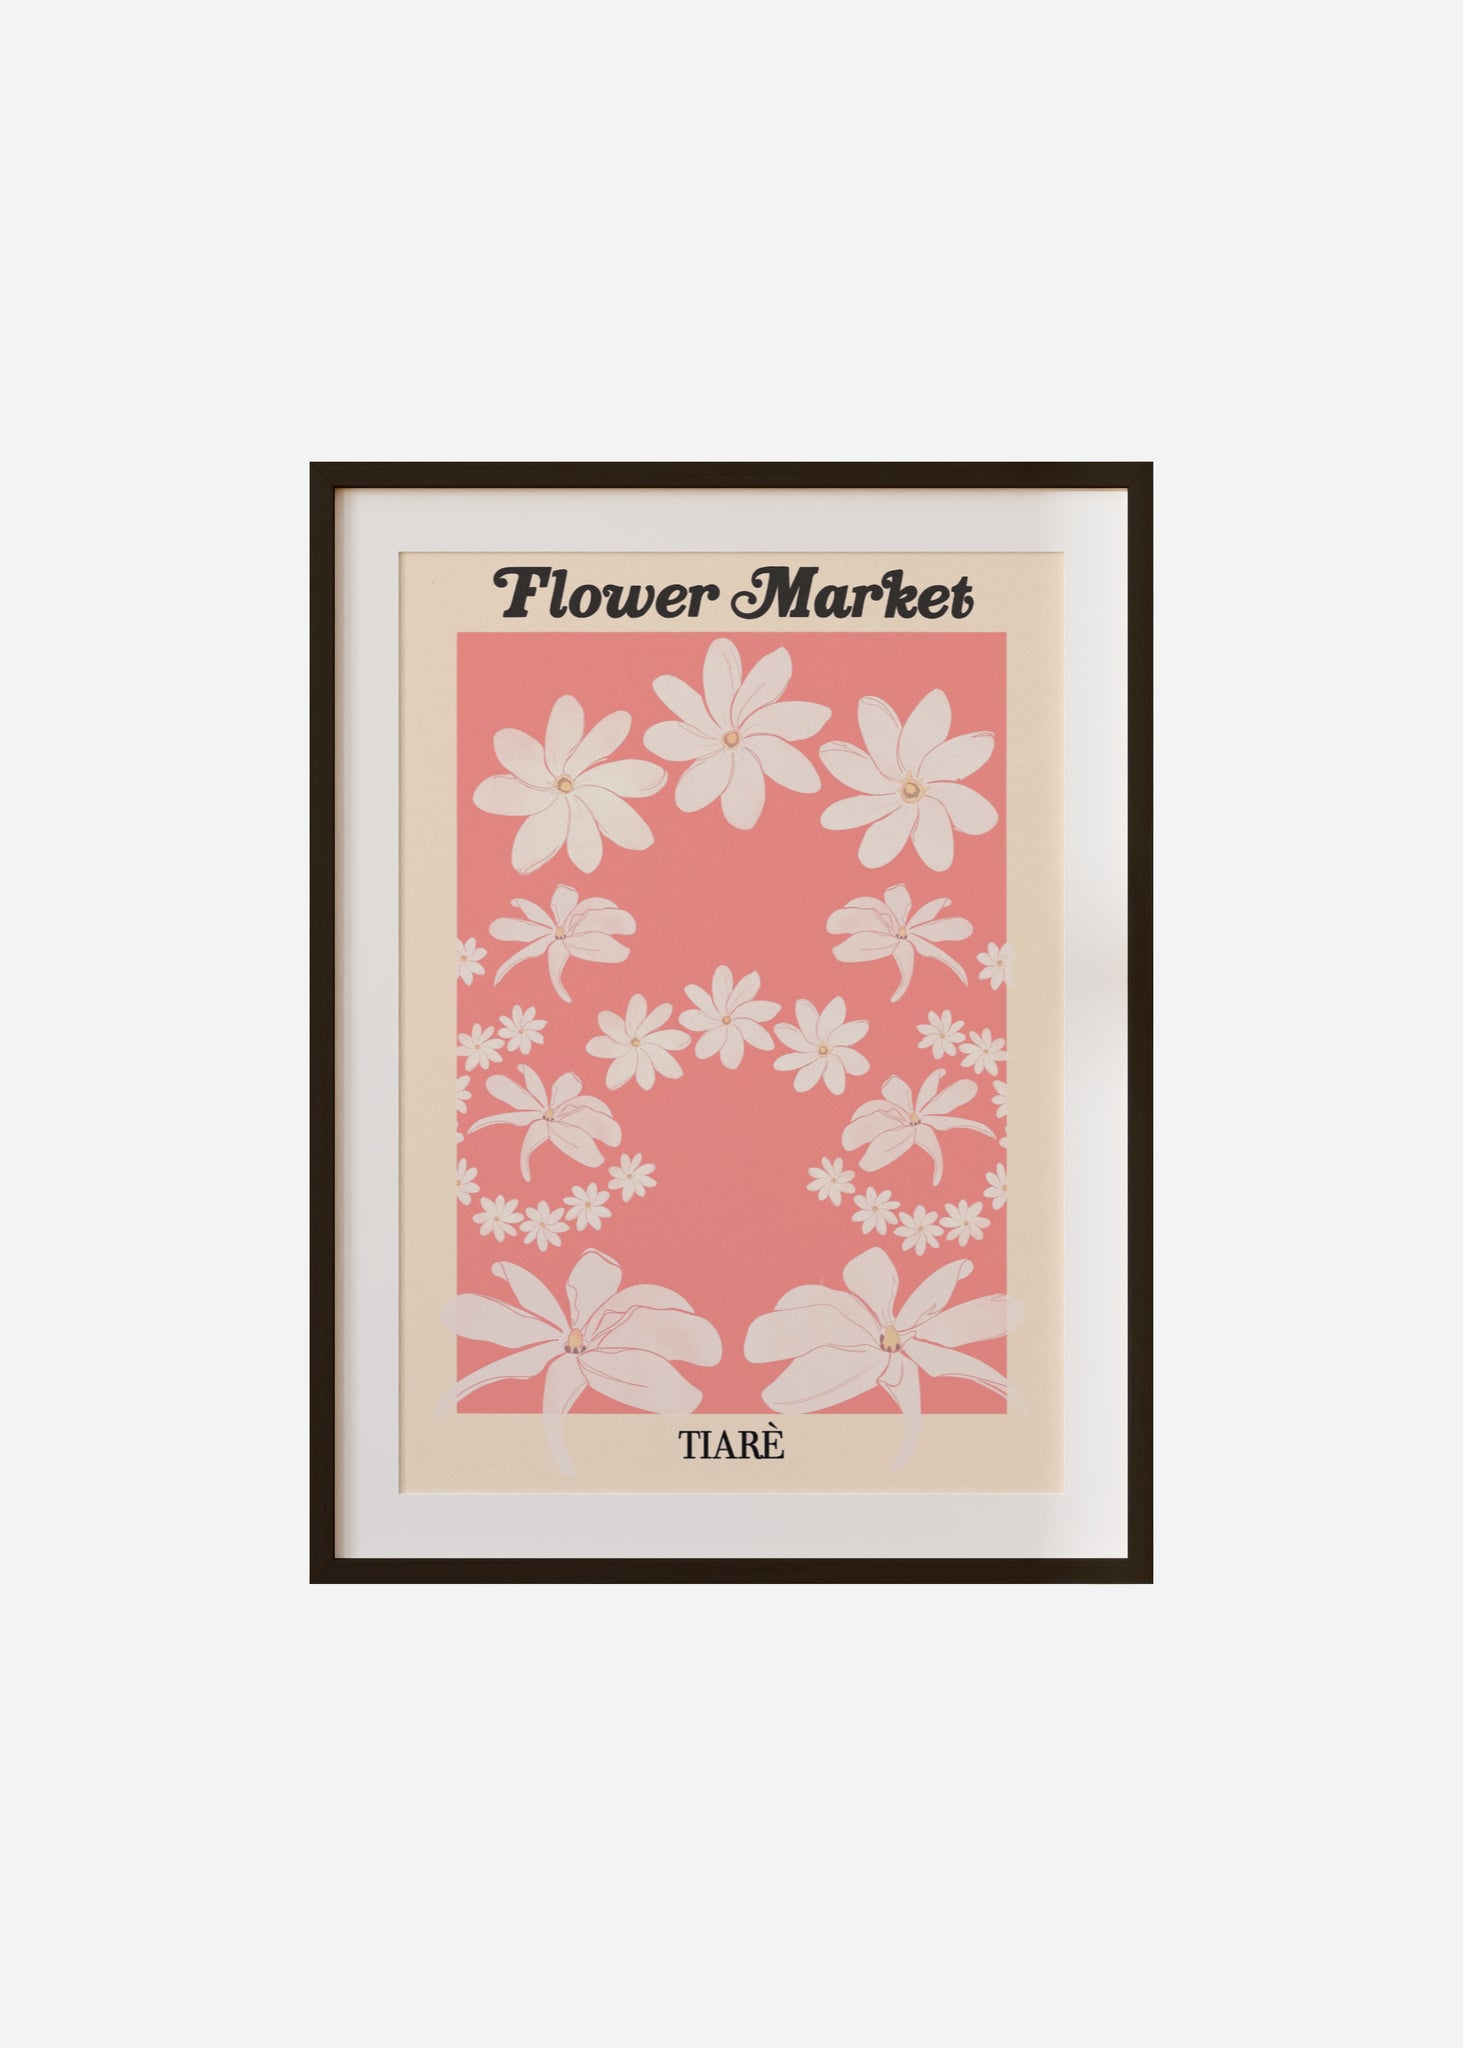 flower market / tiare Framed & Mounted Print